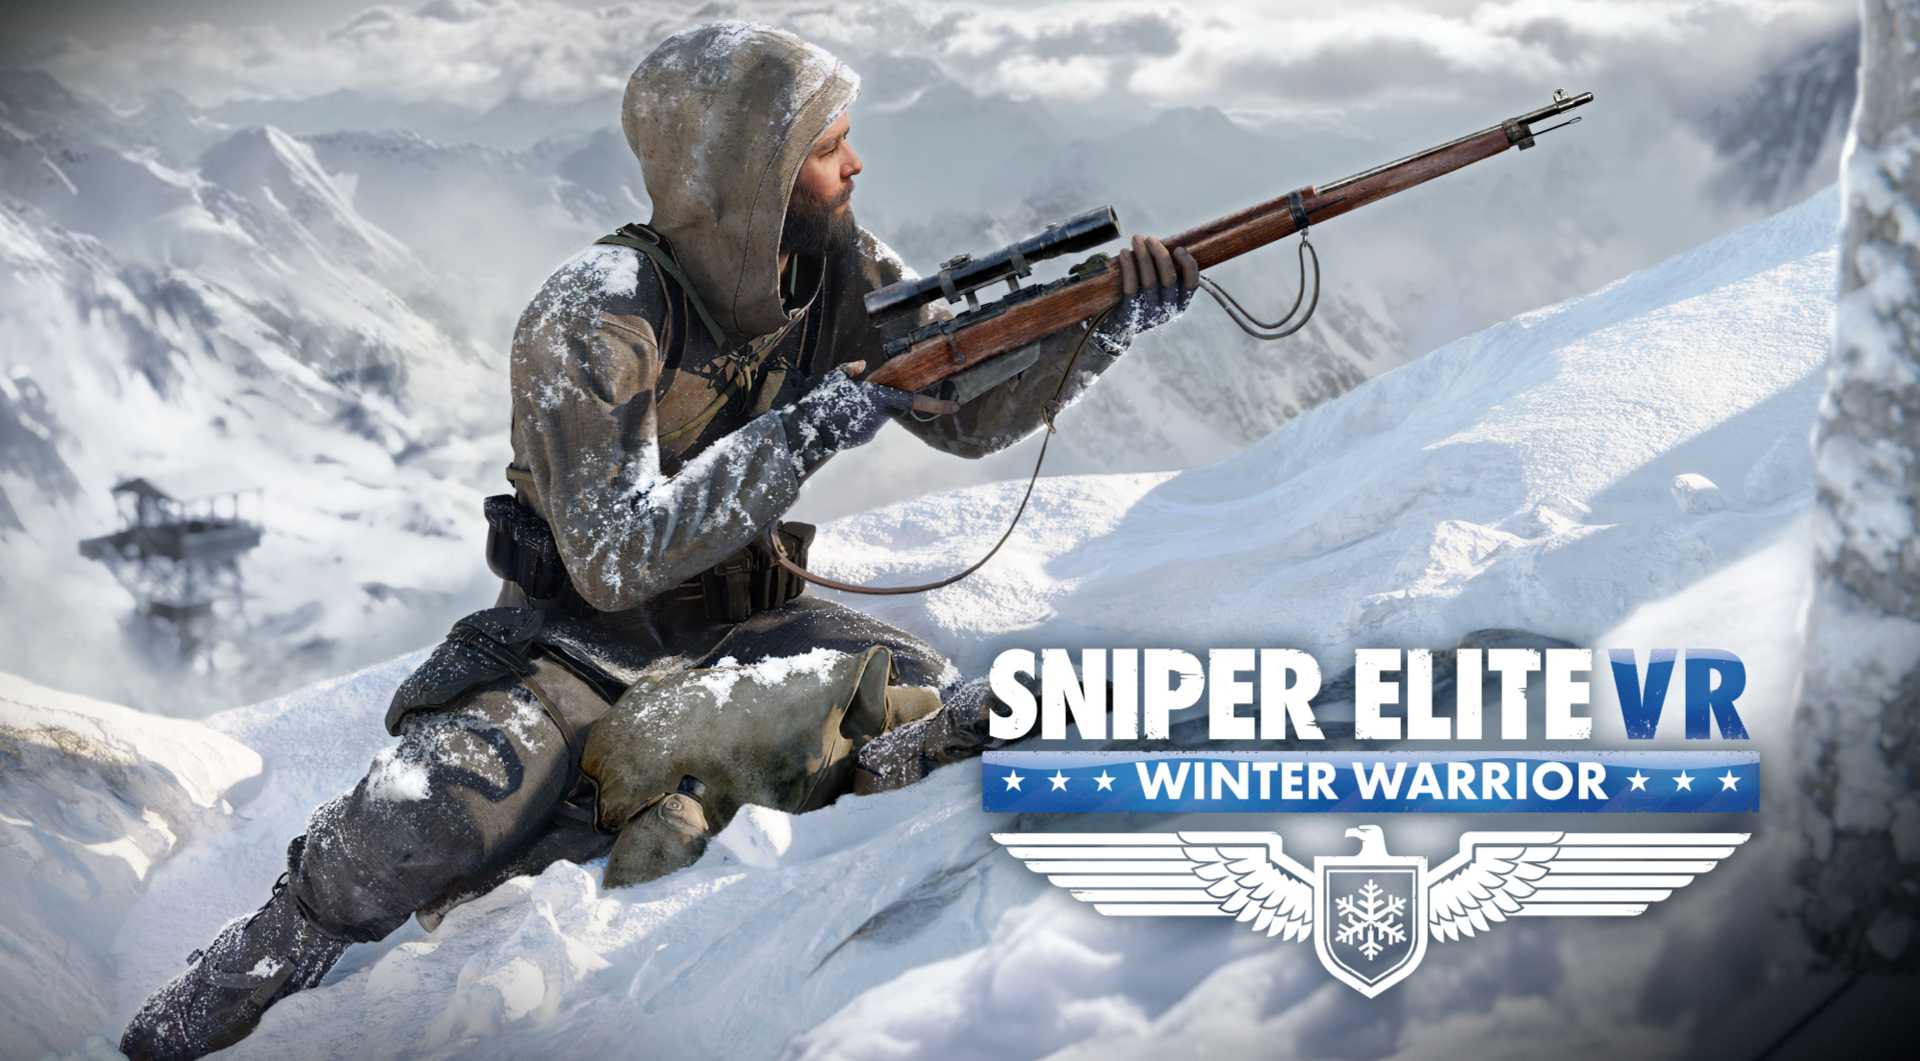 Sniper-Elite_EVR_WinterWarrior_KeyArt